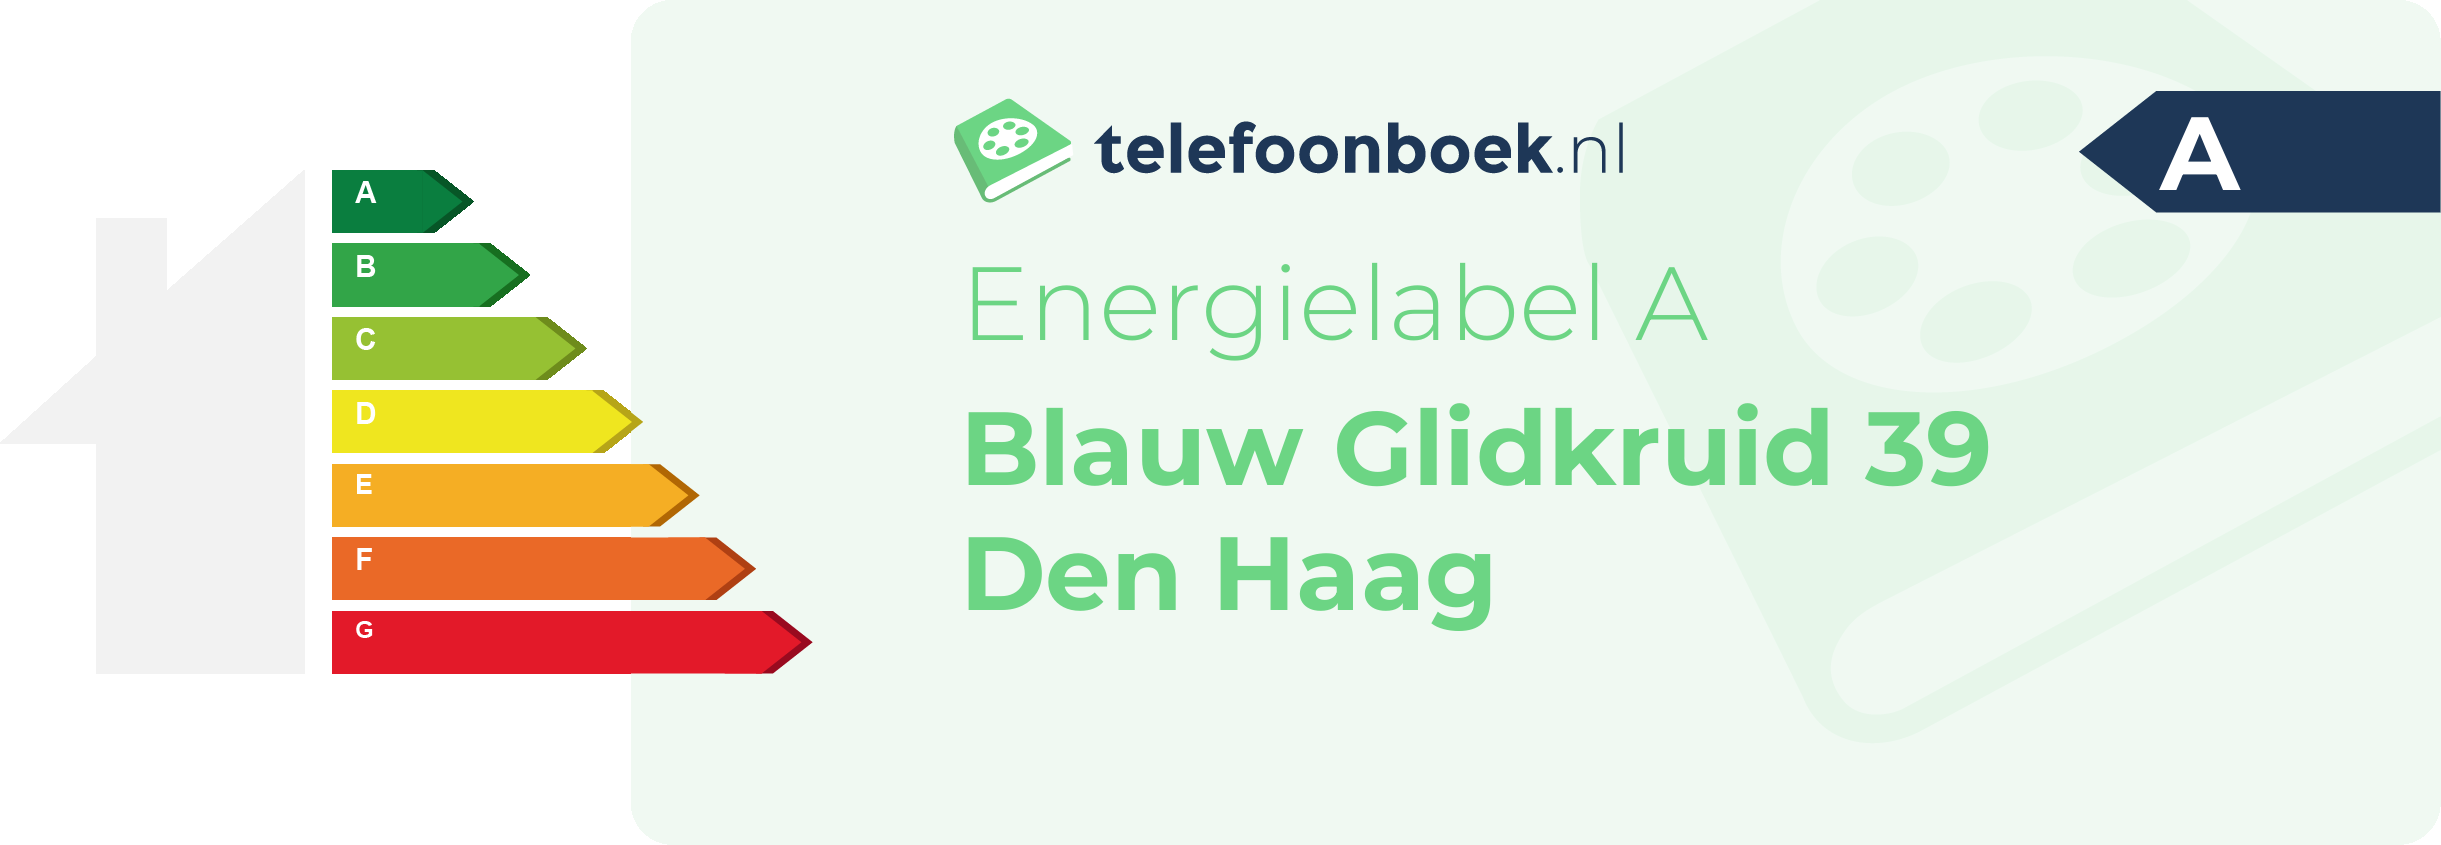 Energielabel Blauw Glidkruid 39 Den Haag